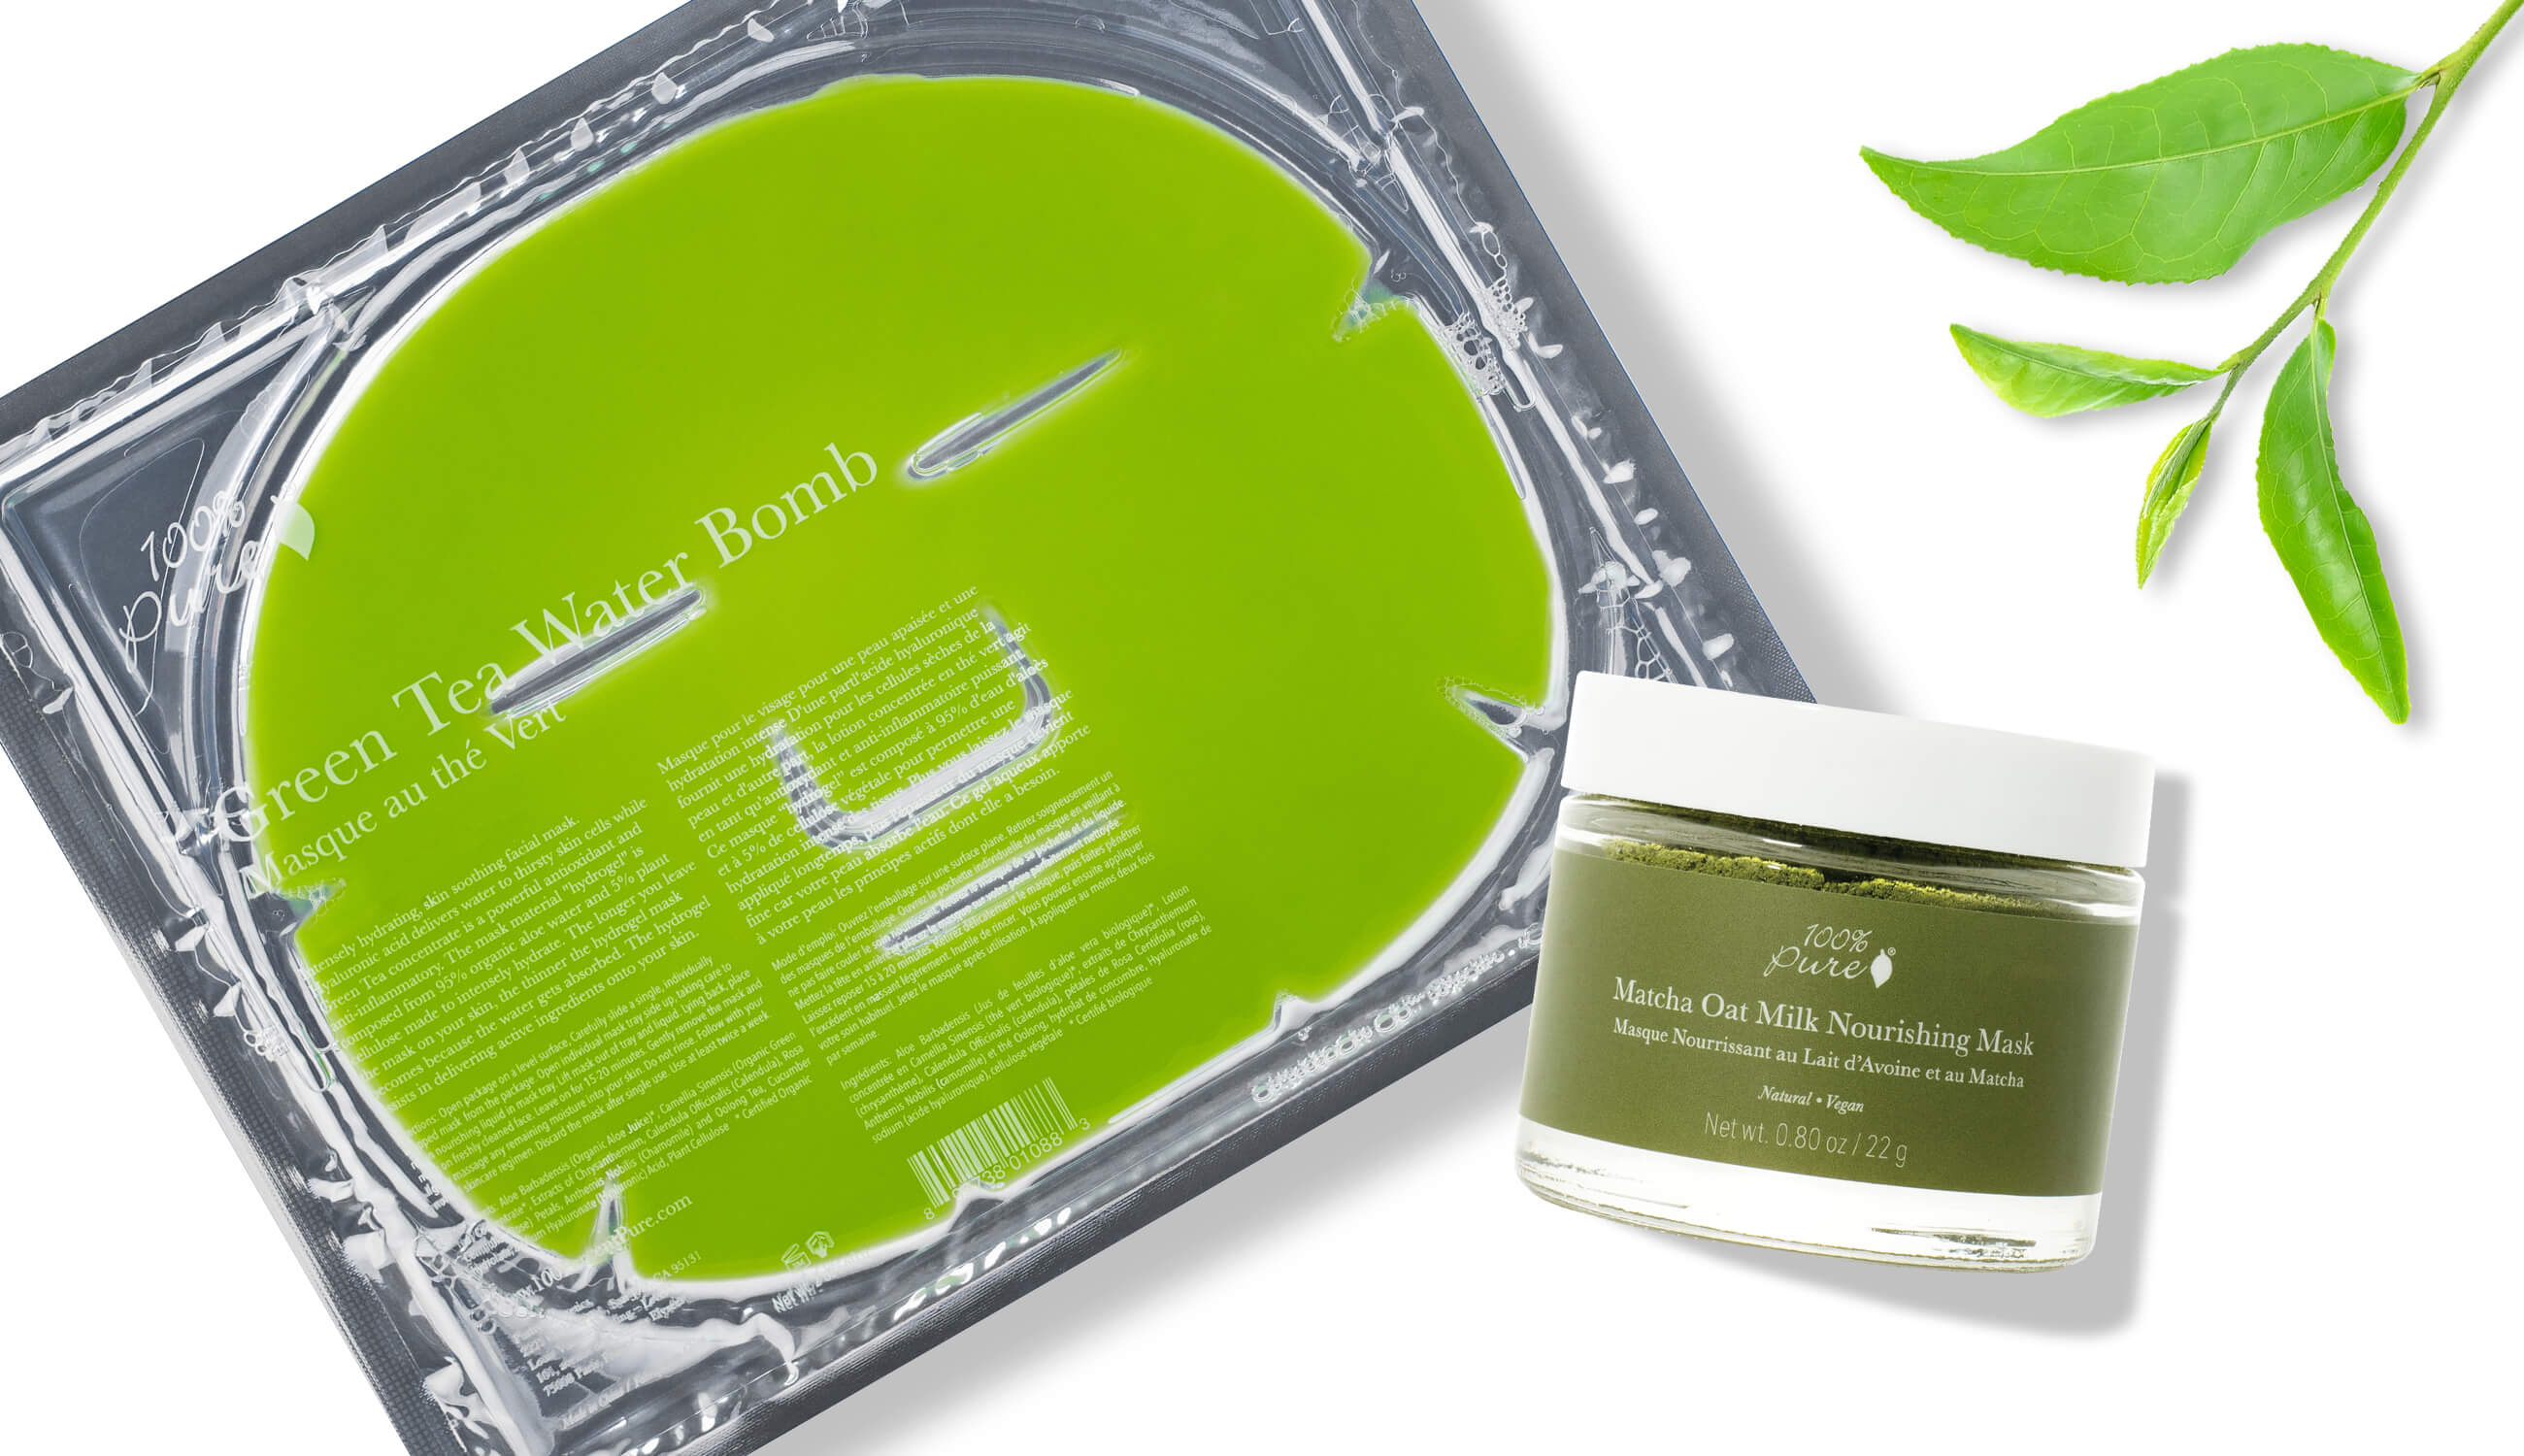 100% PURE Green Tea Water Bomb Mask and Matcha Oat Milk Nourishing Mask